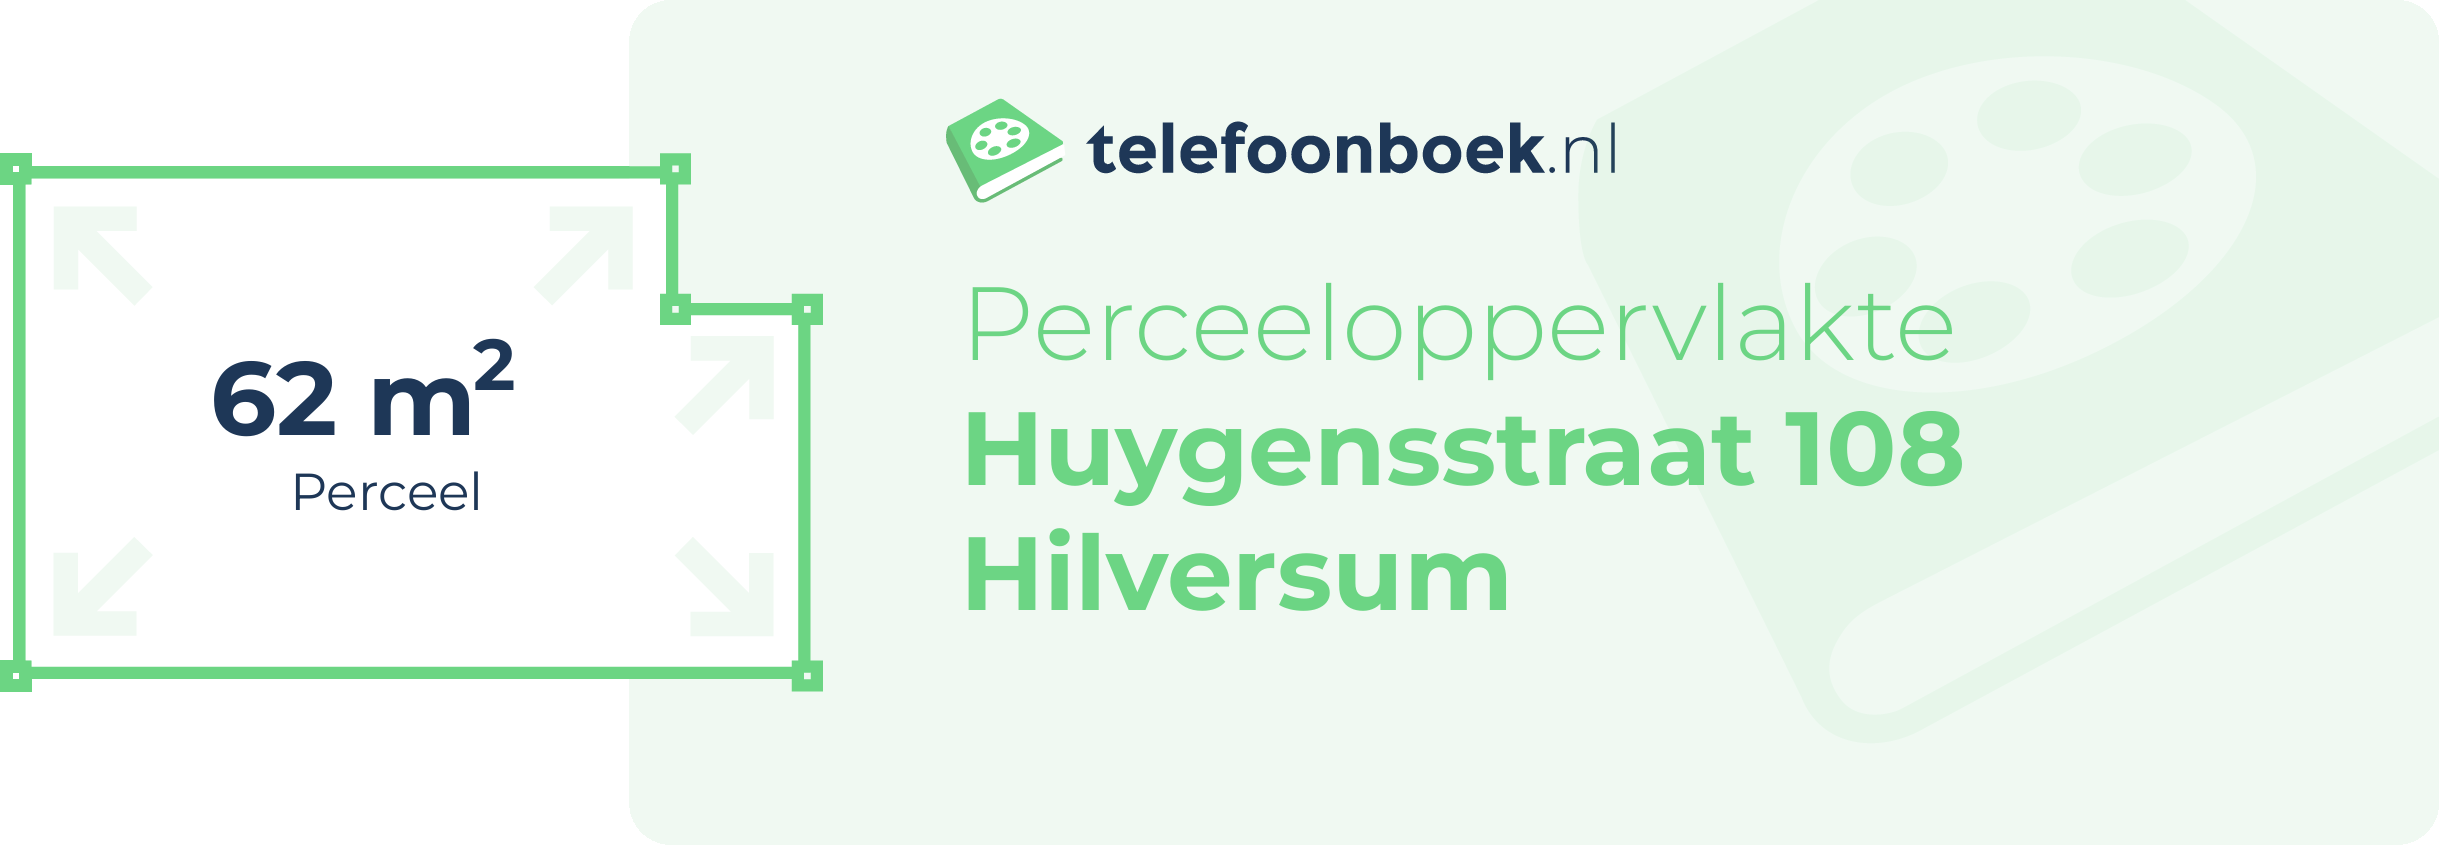 Perceeloppervlakte Huygensstraat 108 Hilversum